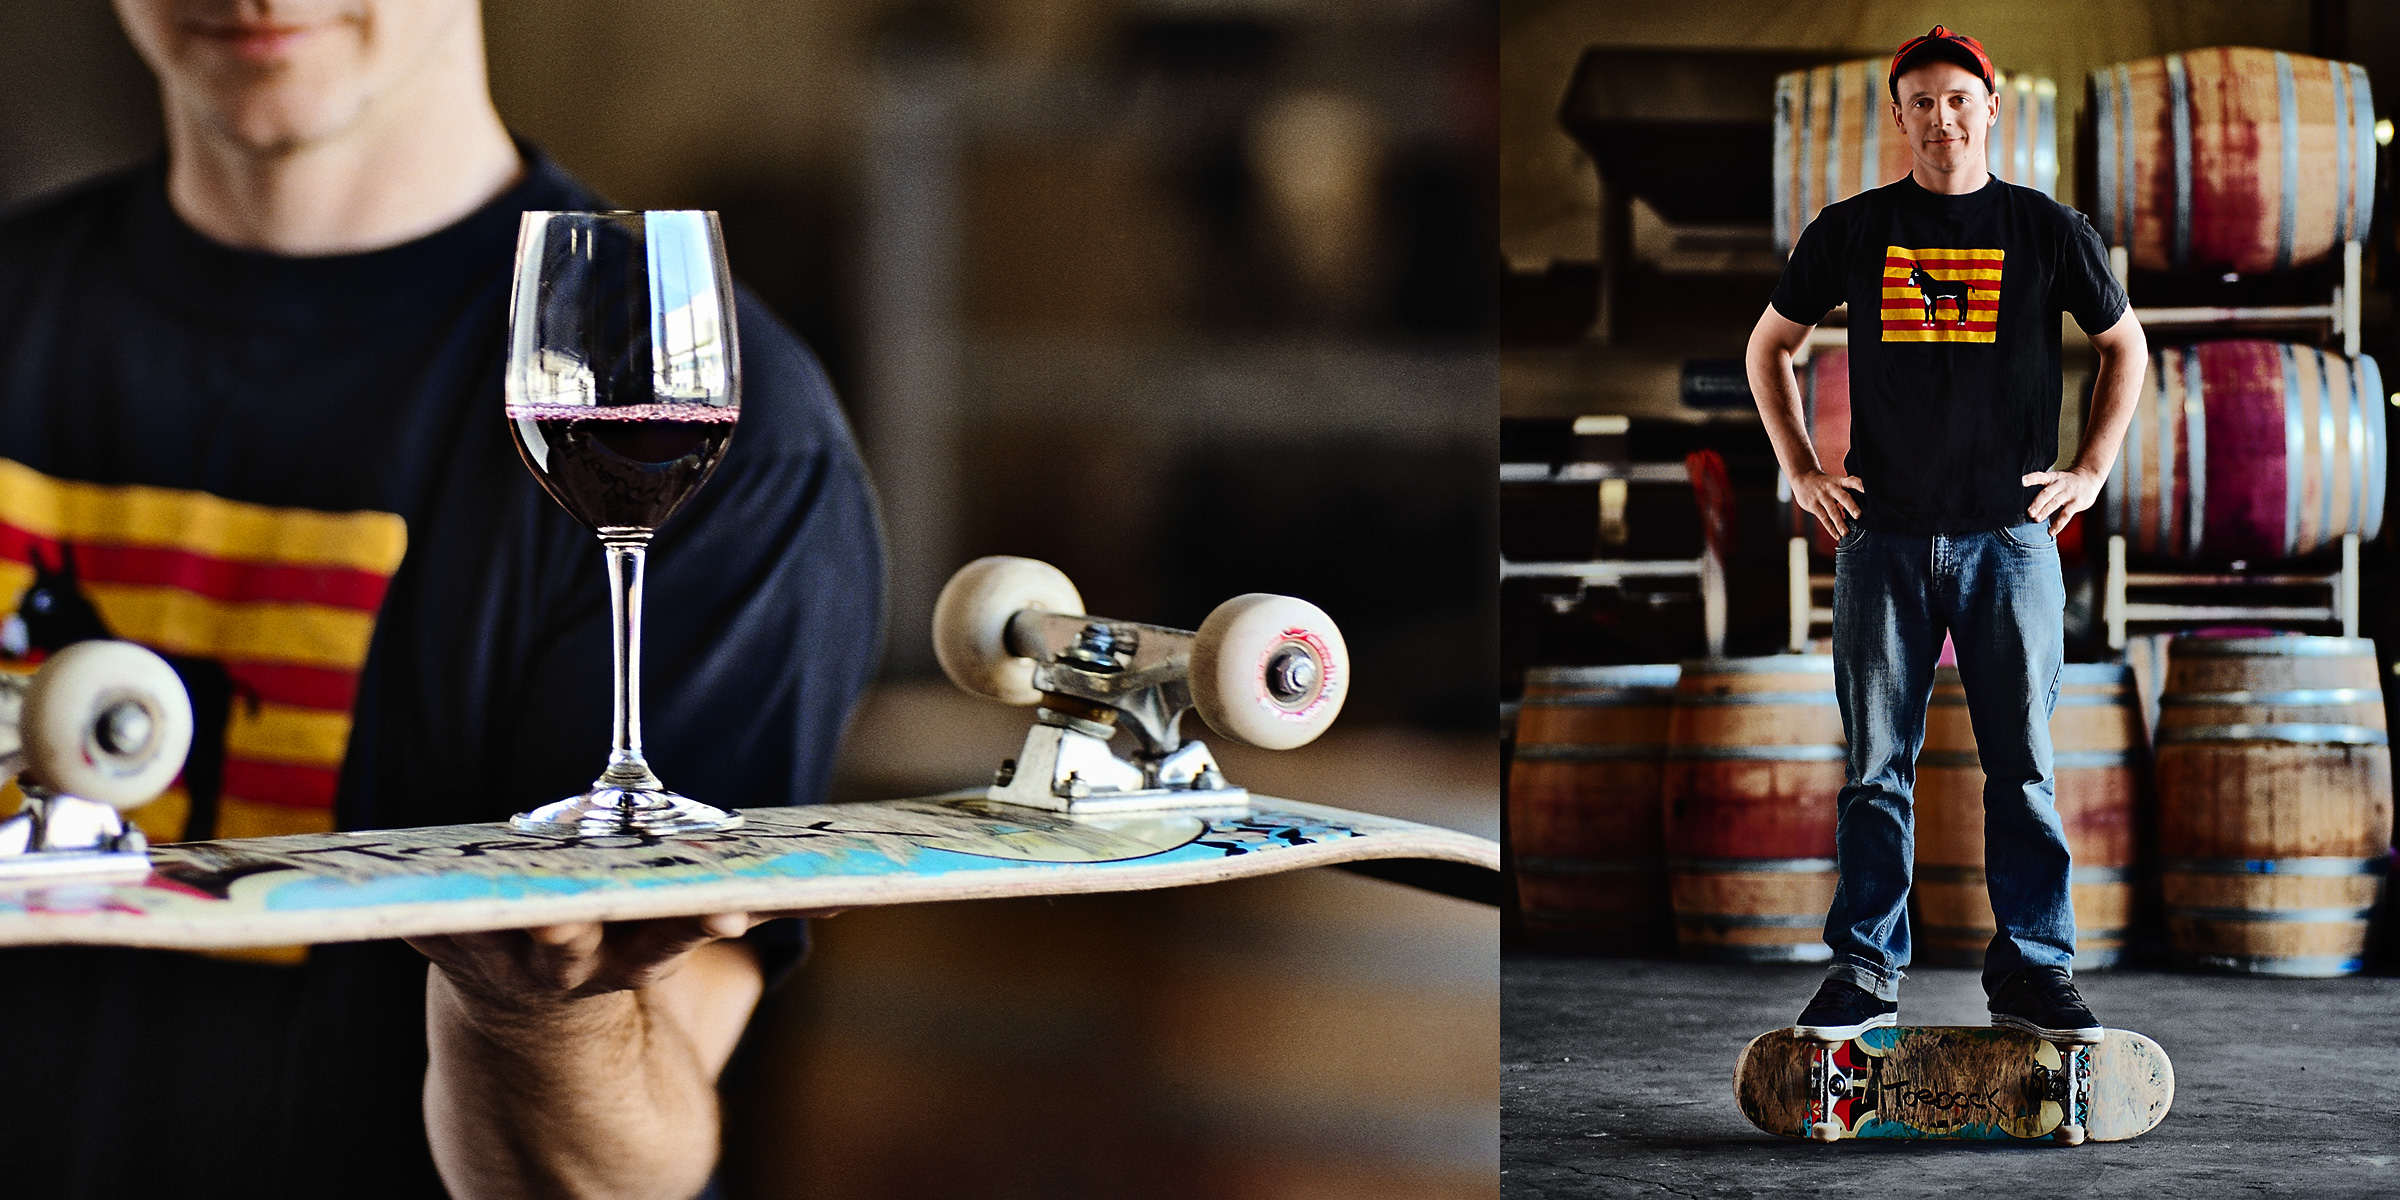 Stephen Austin Welch commercial director advertising photographer lifestyle portrait landscape winery vineyard vino_skater-spread